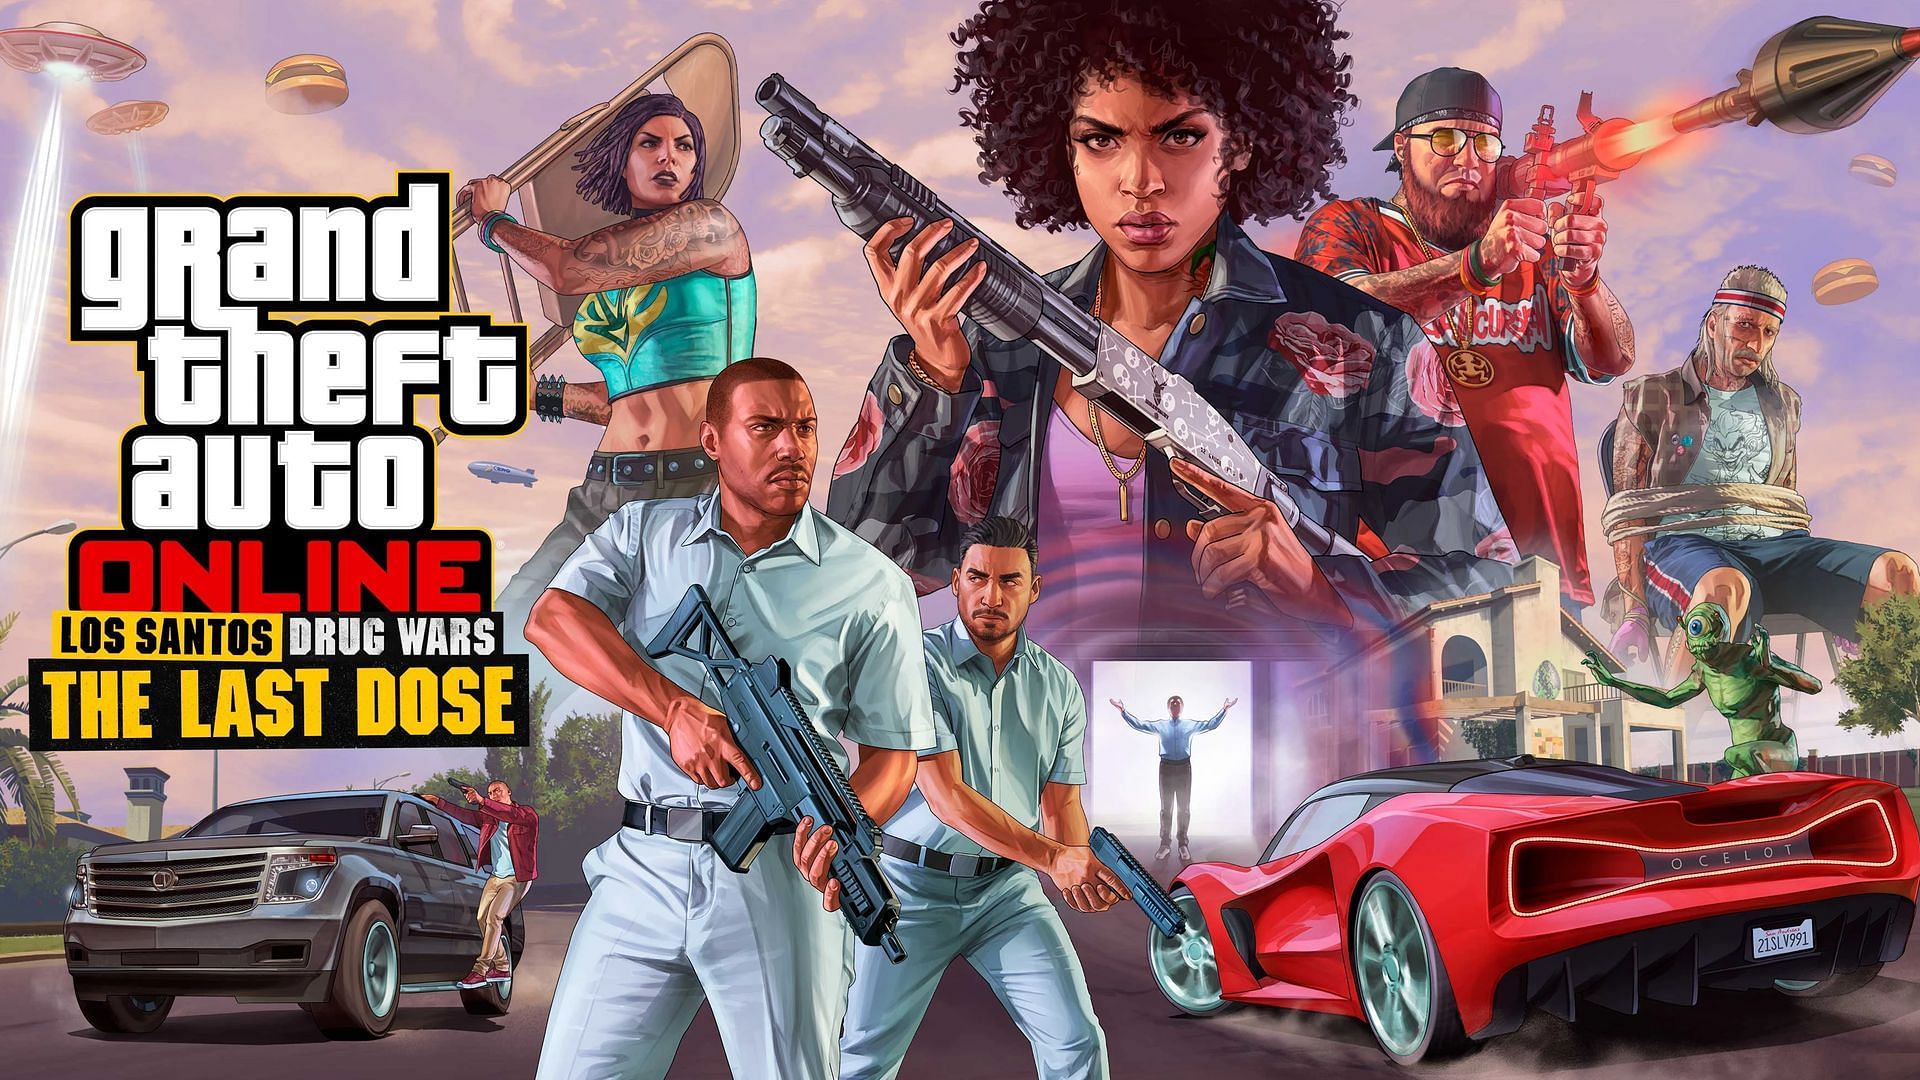 Los Santos Drug Wars was the last big DLC update, with Last Dose being a part of it (Image via Rockstar Games)